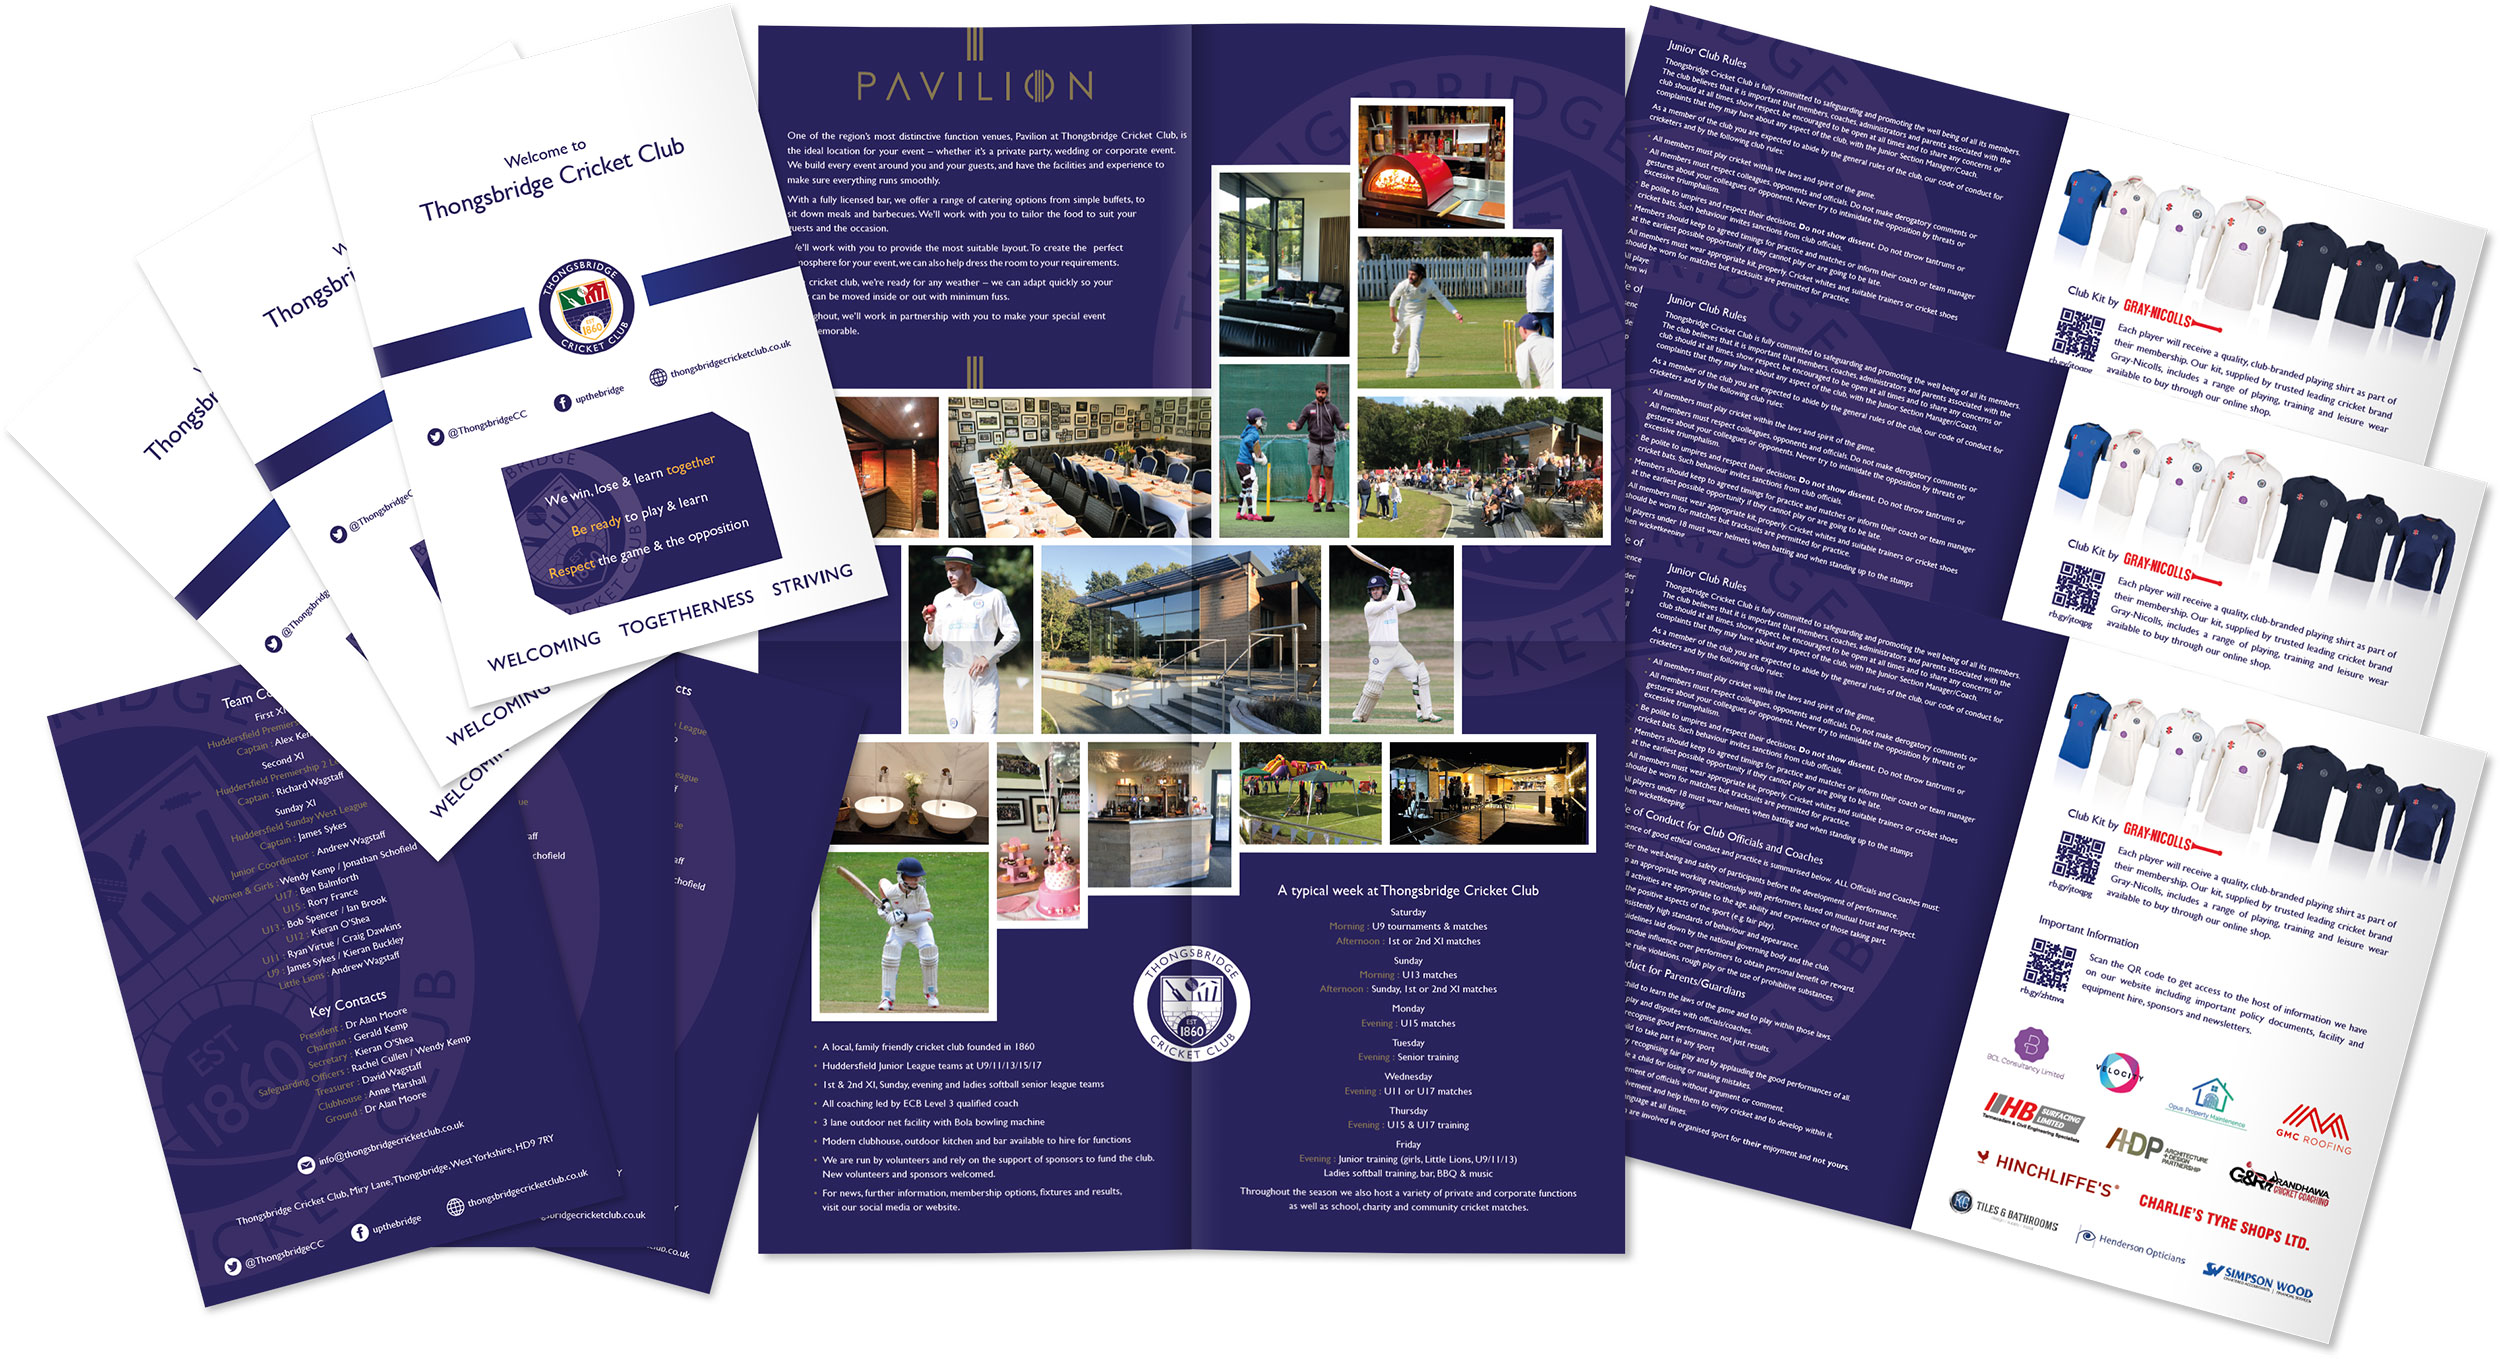 Thongsbridge Cricket Club Sign-on Pack